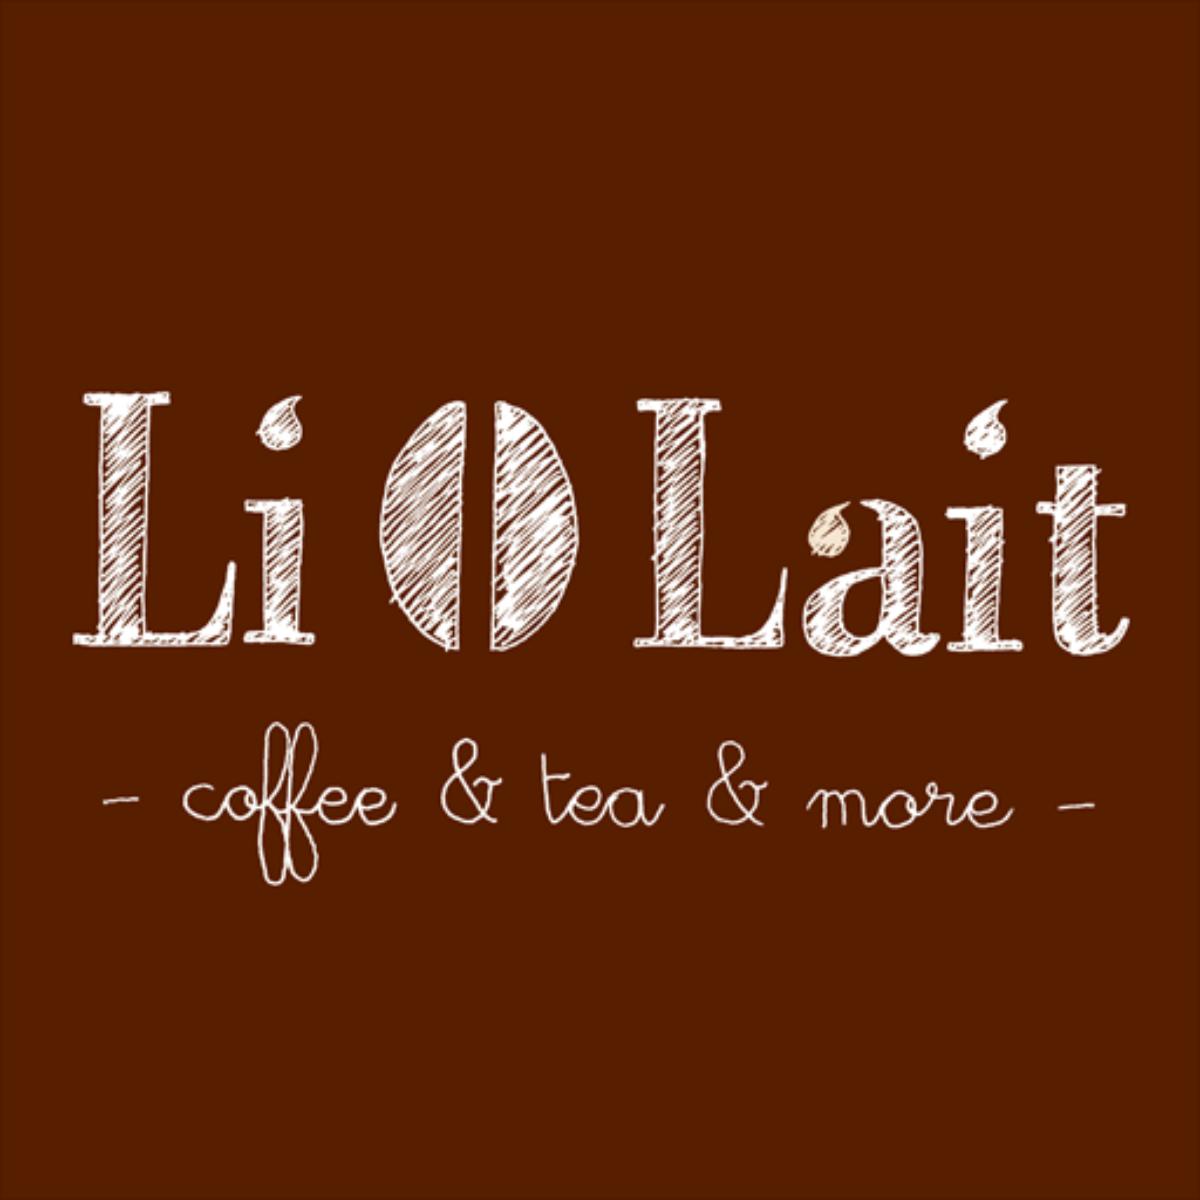 Liolait logo